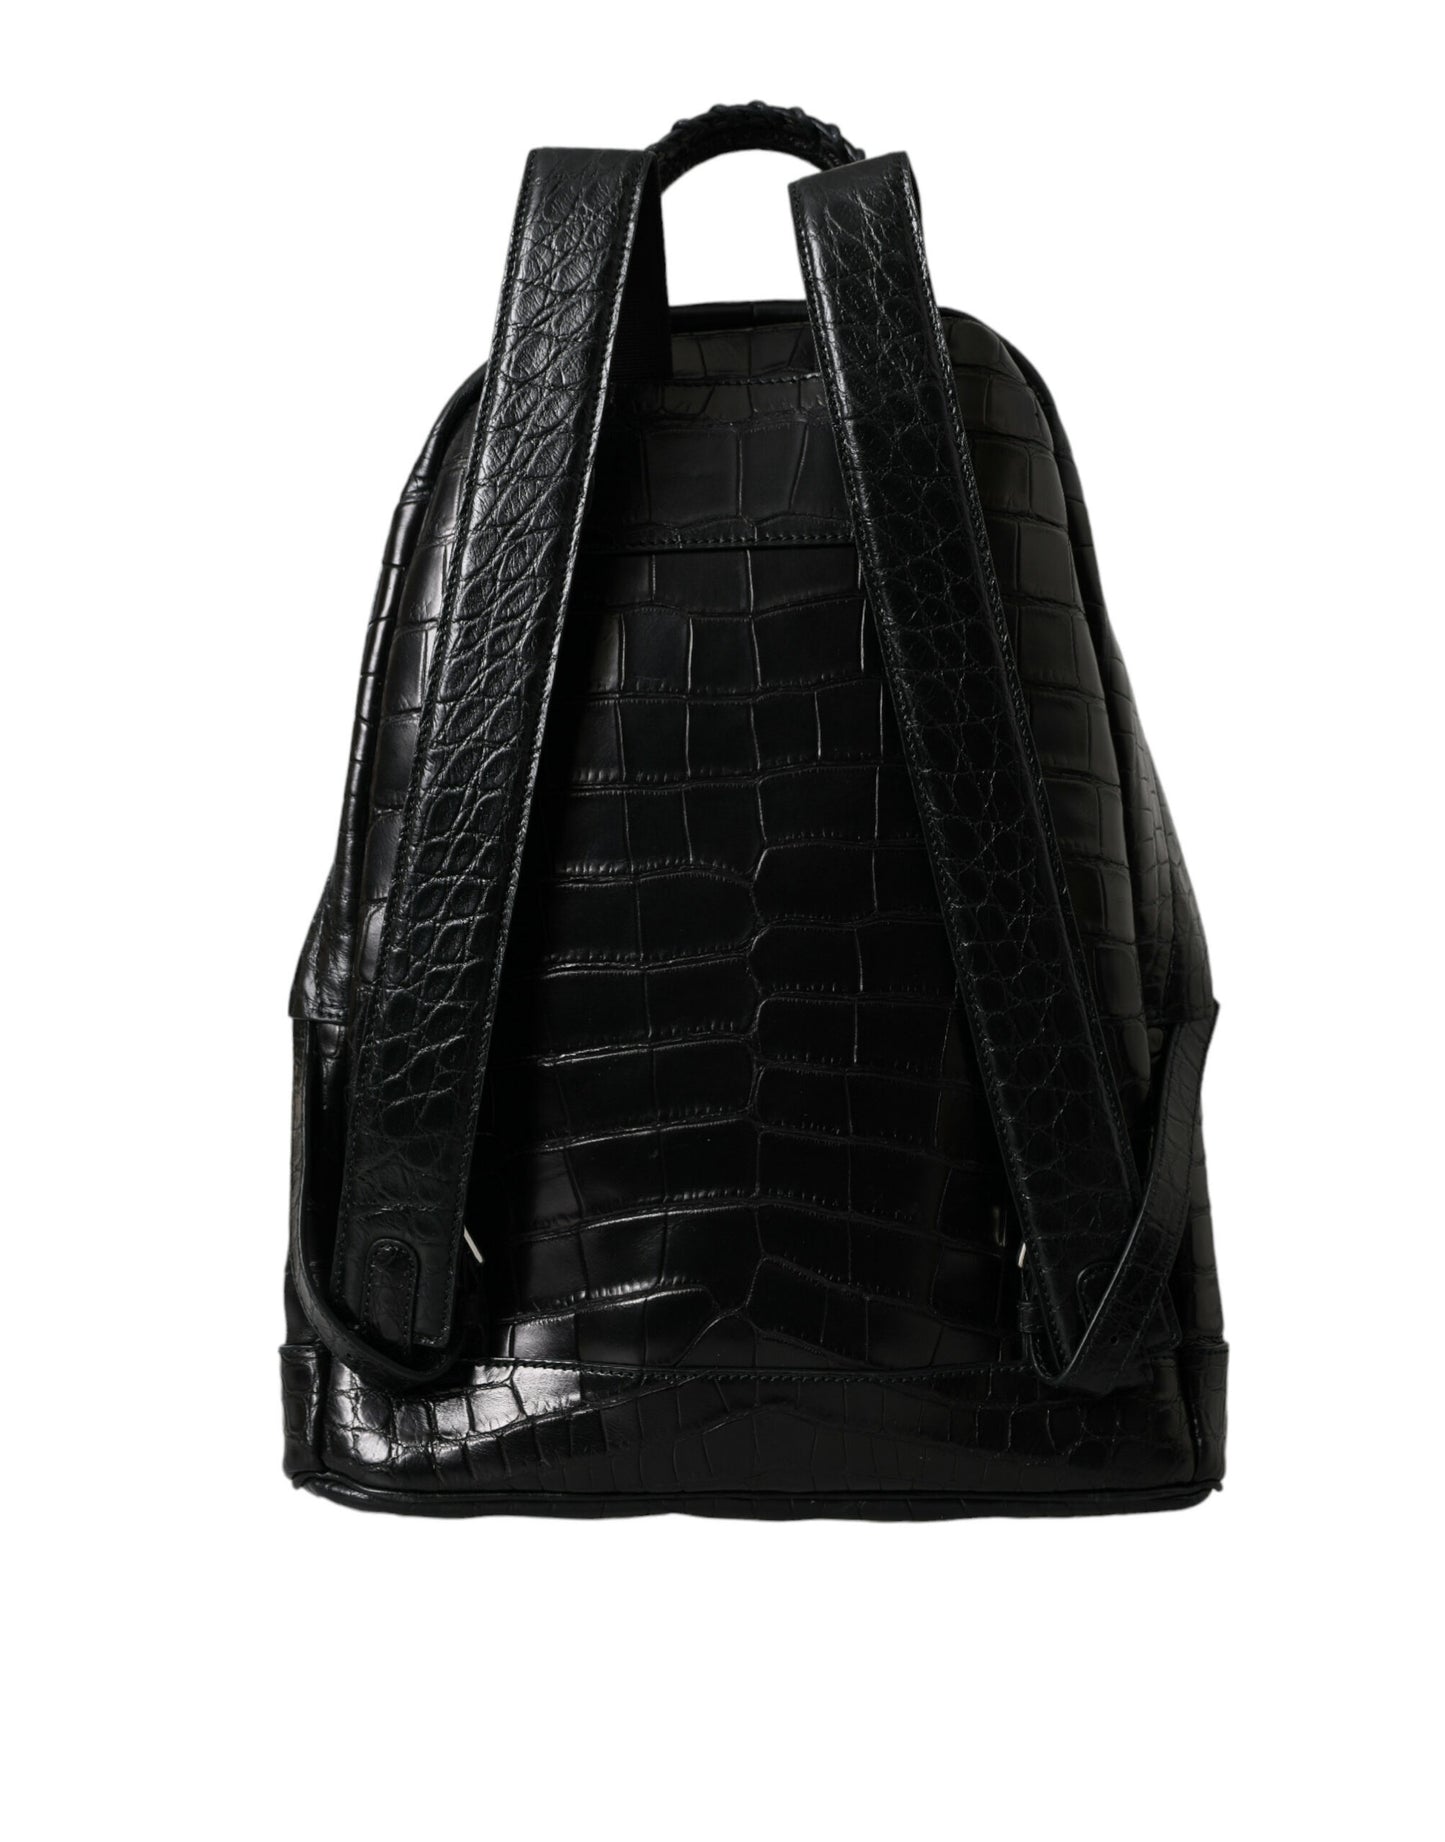 Exquisite Alligator Skin Luxury Backpack